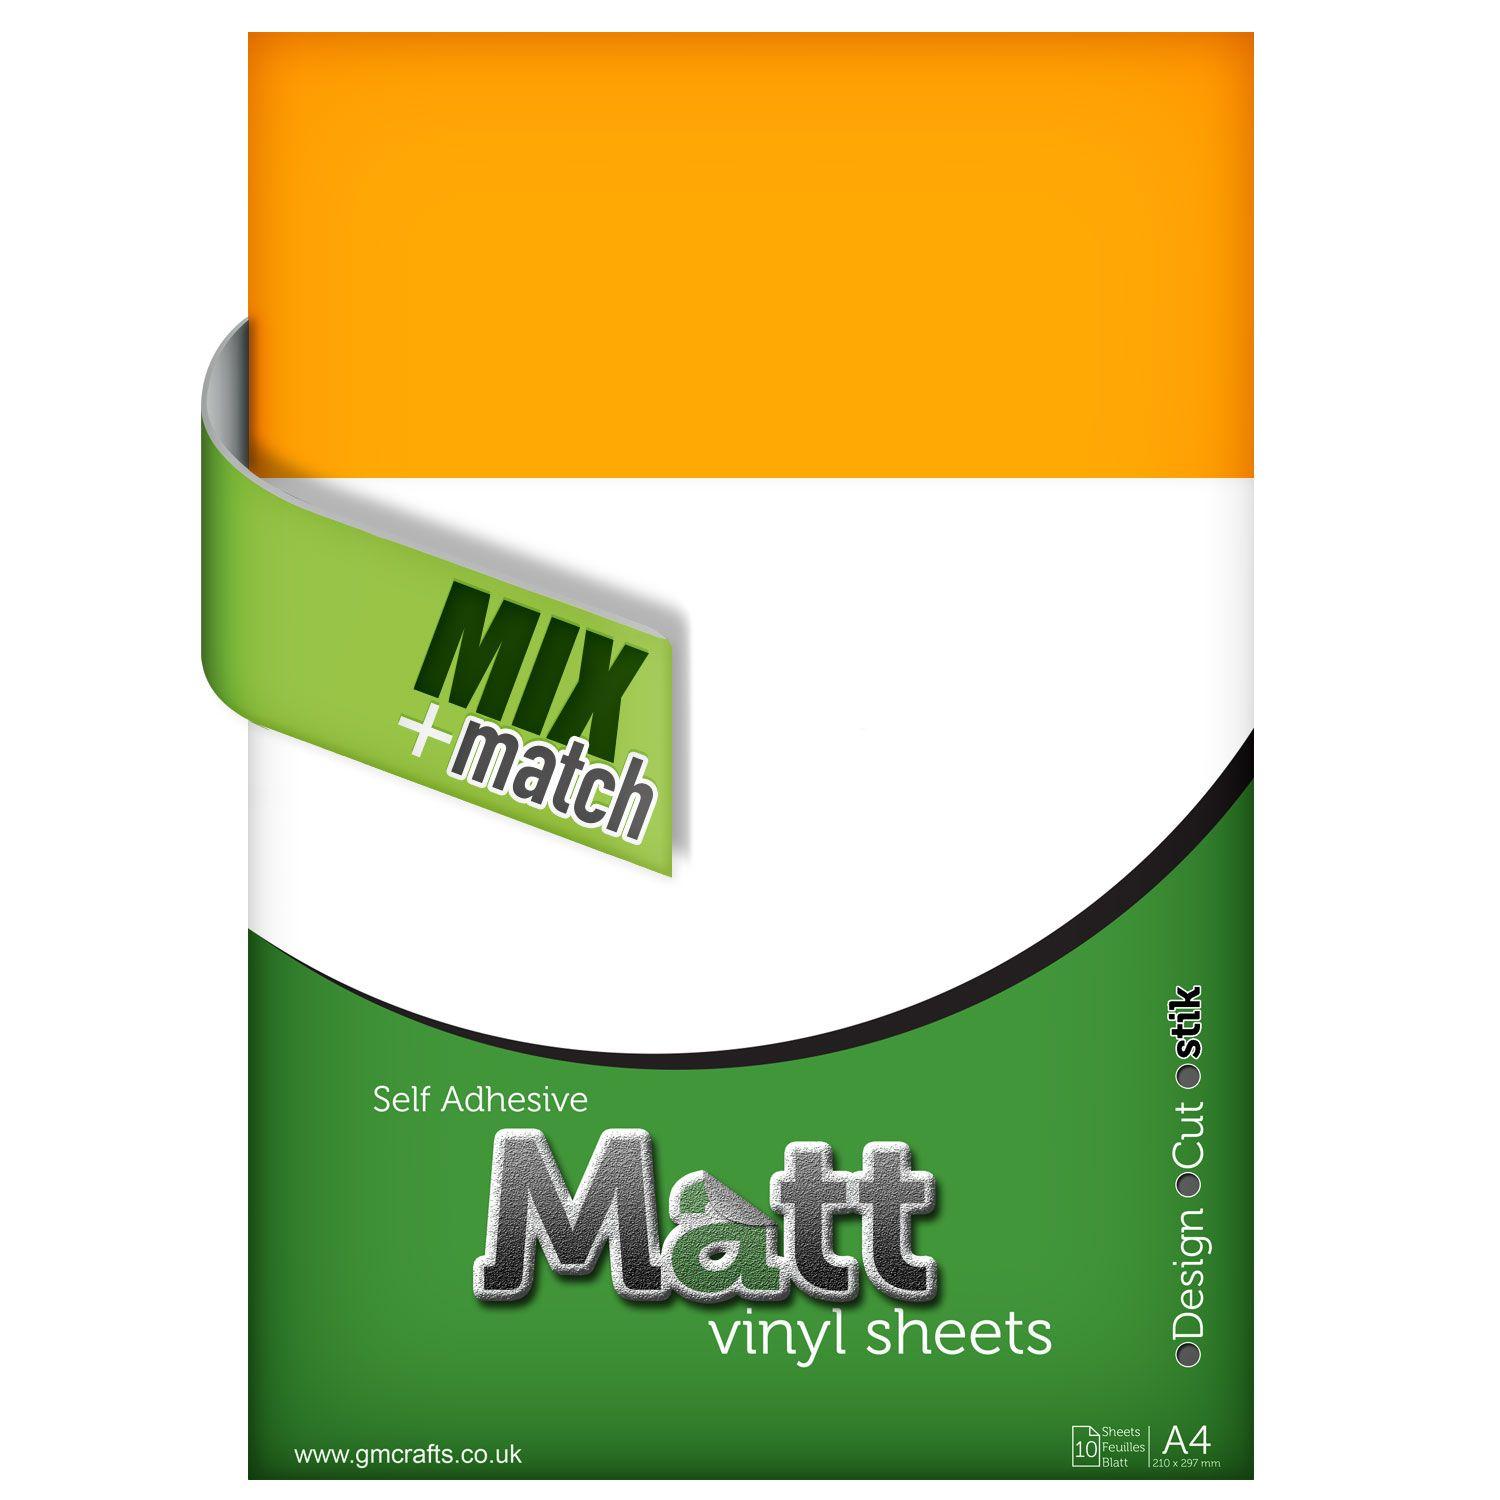 Yellow Sheets of Paper Logo - x Self Adhesive A4 Golden Yellow Matt Vinyl Sheets